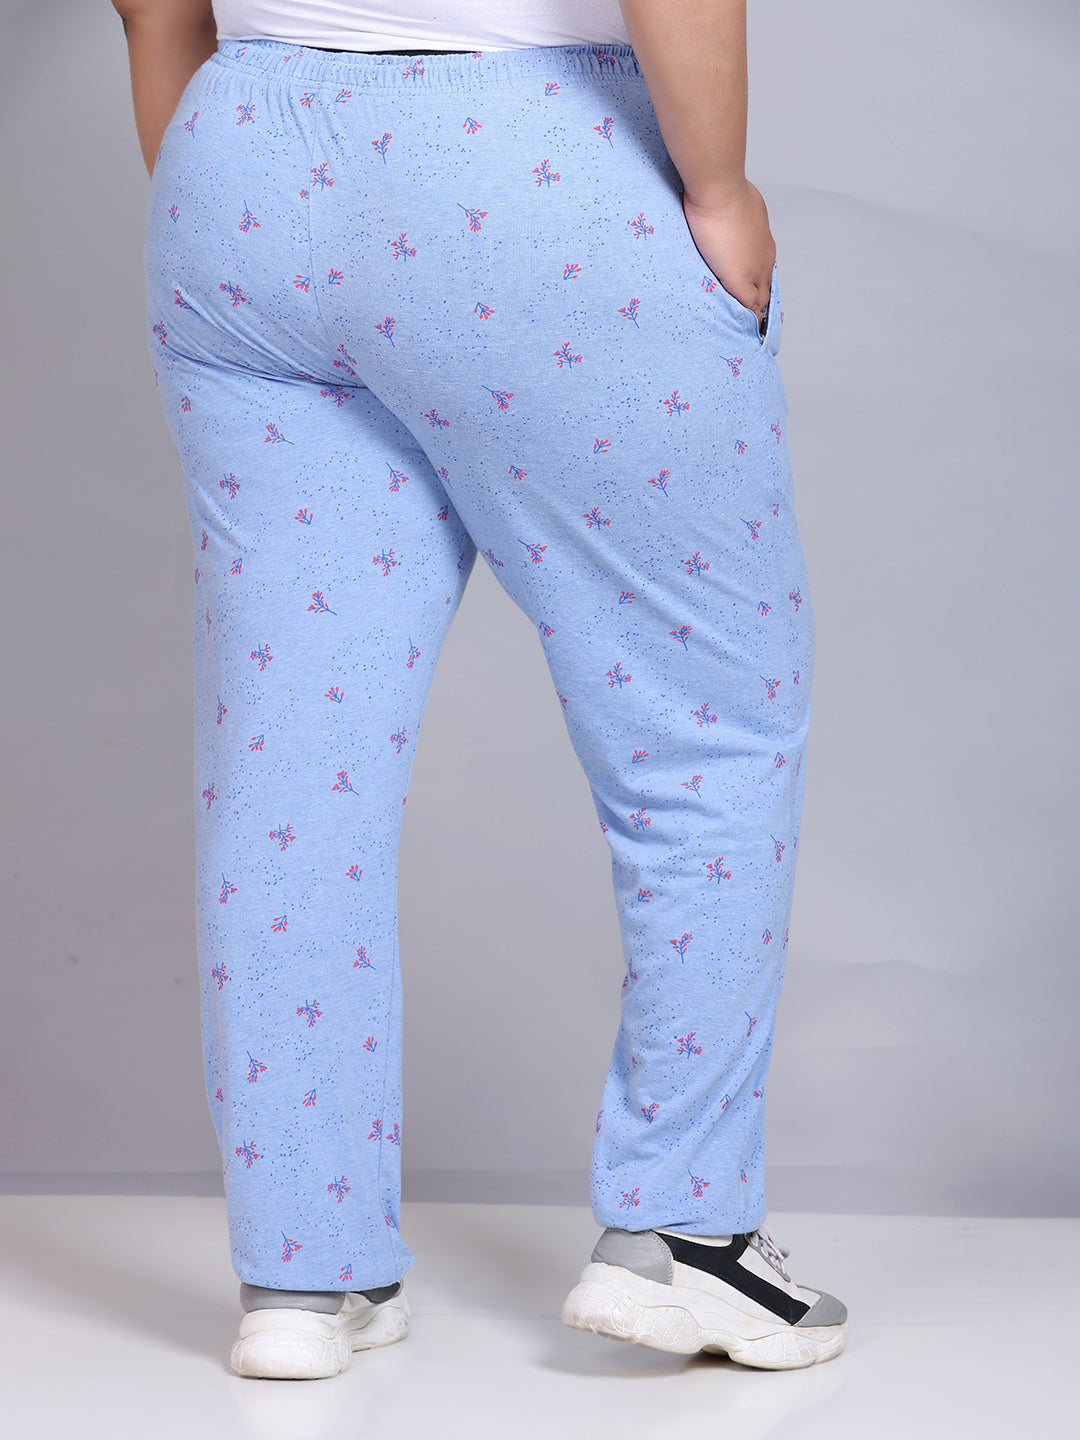 MYO Printed Stylish Cotton Track Pants for Women for Daily use Track Pants  for Women Combo Pack of 2 Size 30 BlackWhite  Amazonin Clothing   Accessories